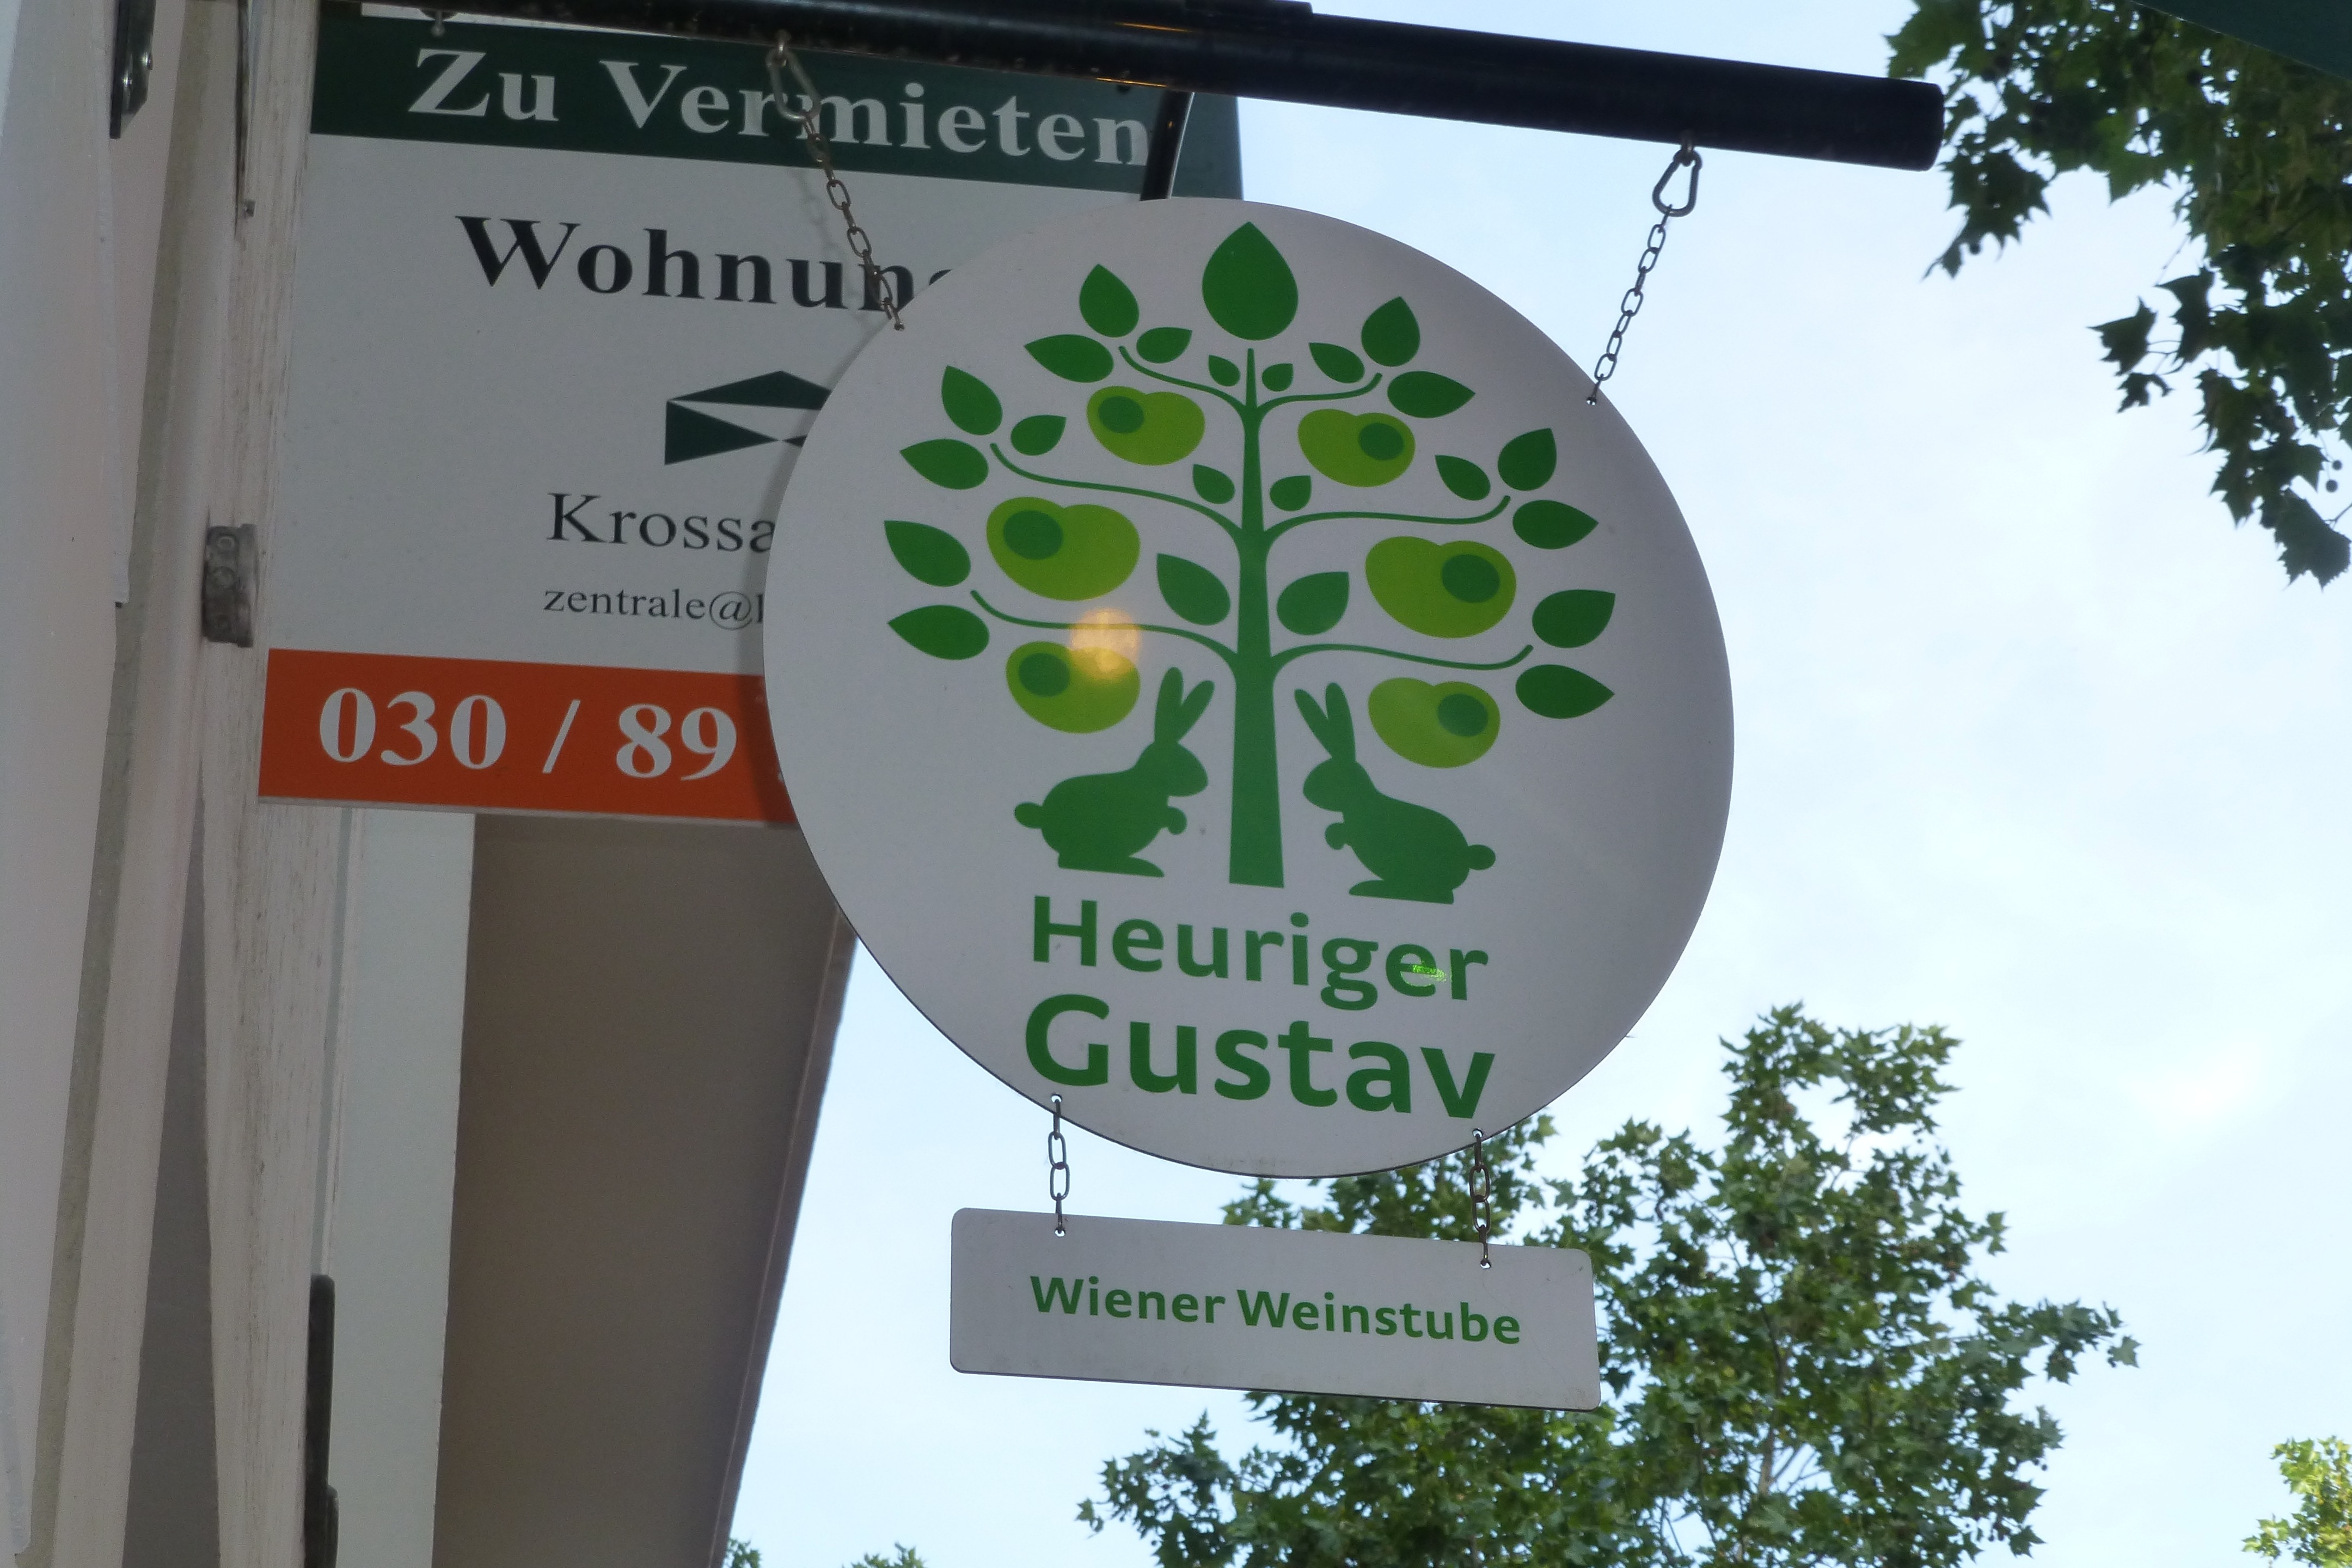 Heuriger, Shield, Viennese Wine Bar, tree, day